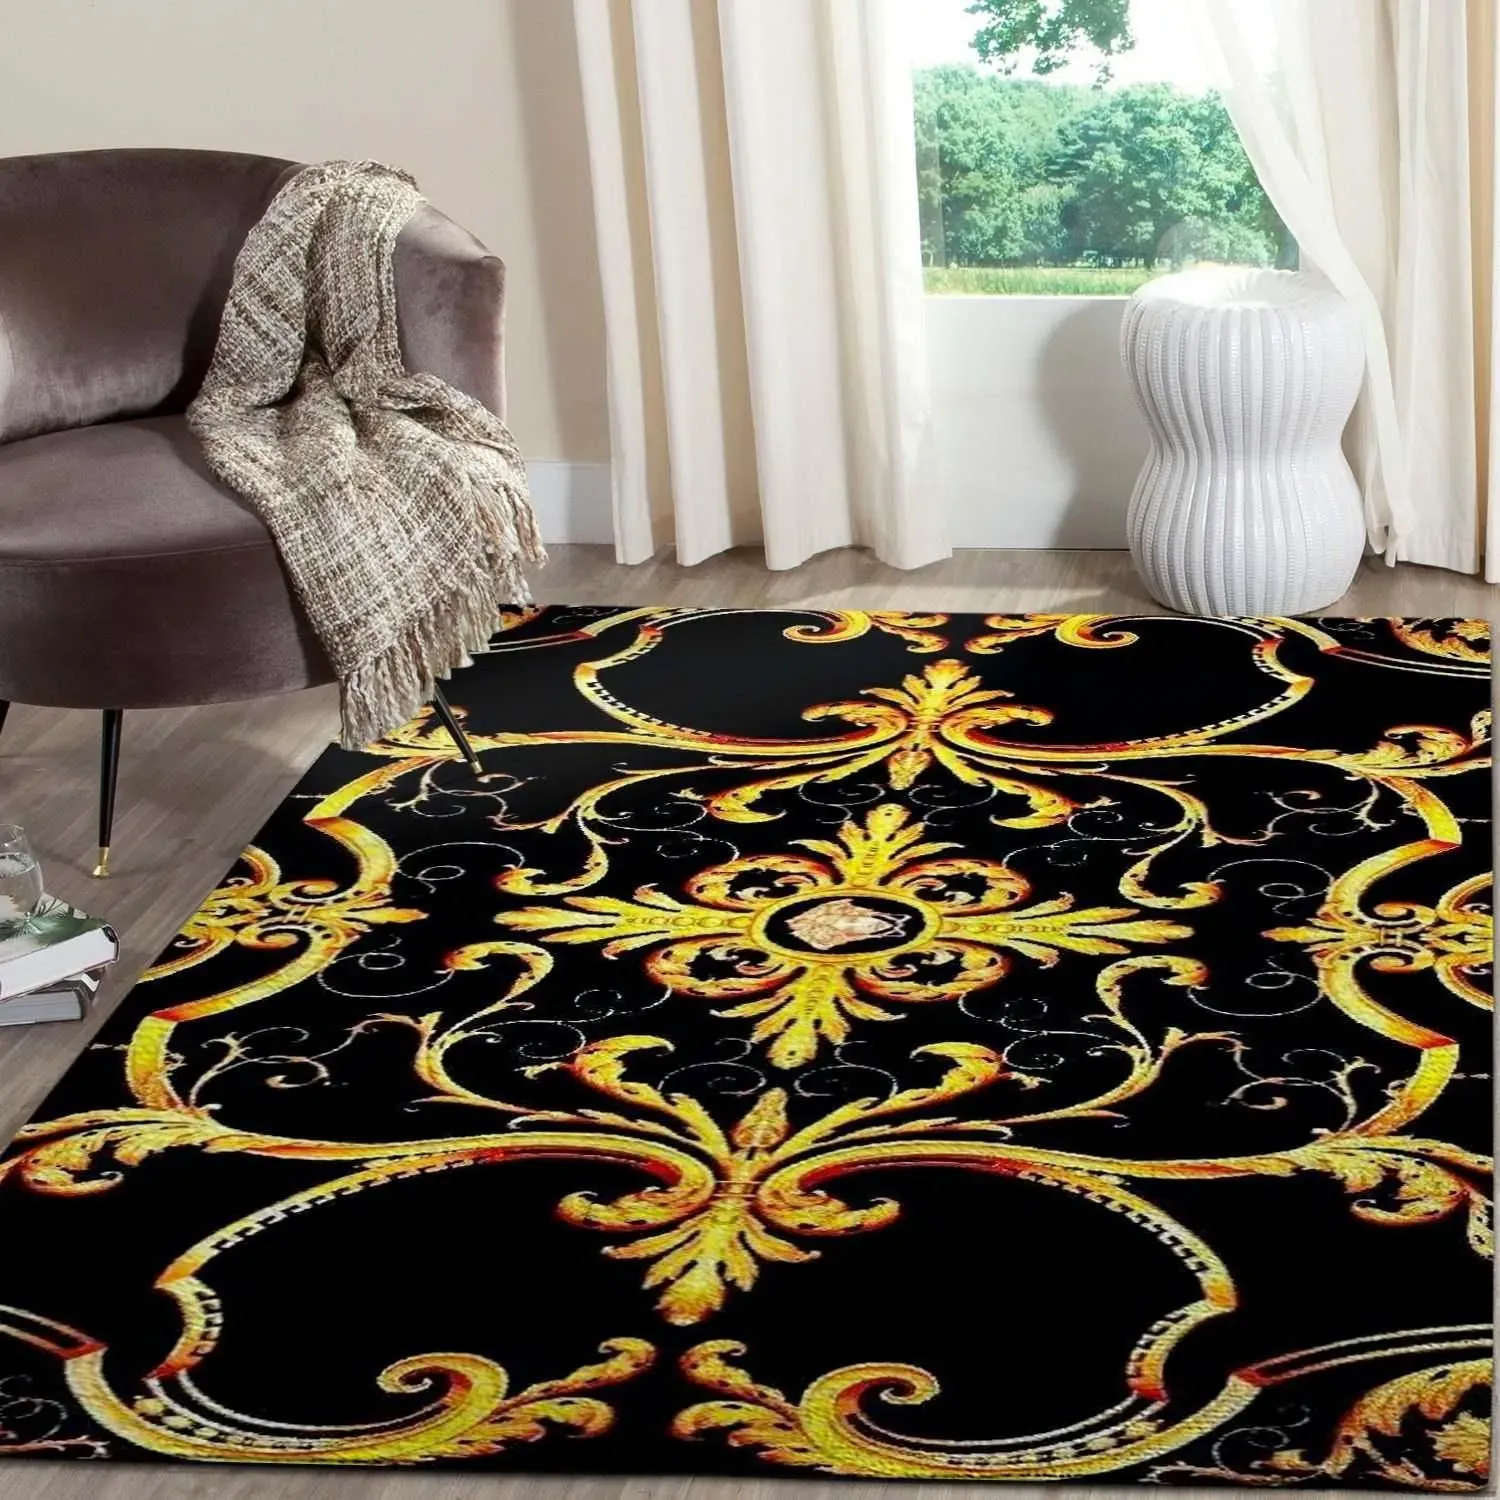 Versace Rectangle Rug Area Carpet Luxury Home Decor Door Mat Fashion Brand